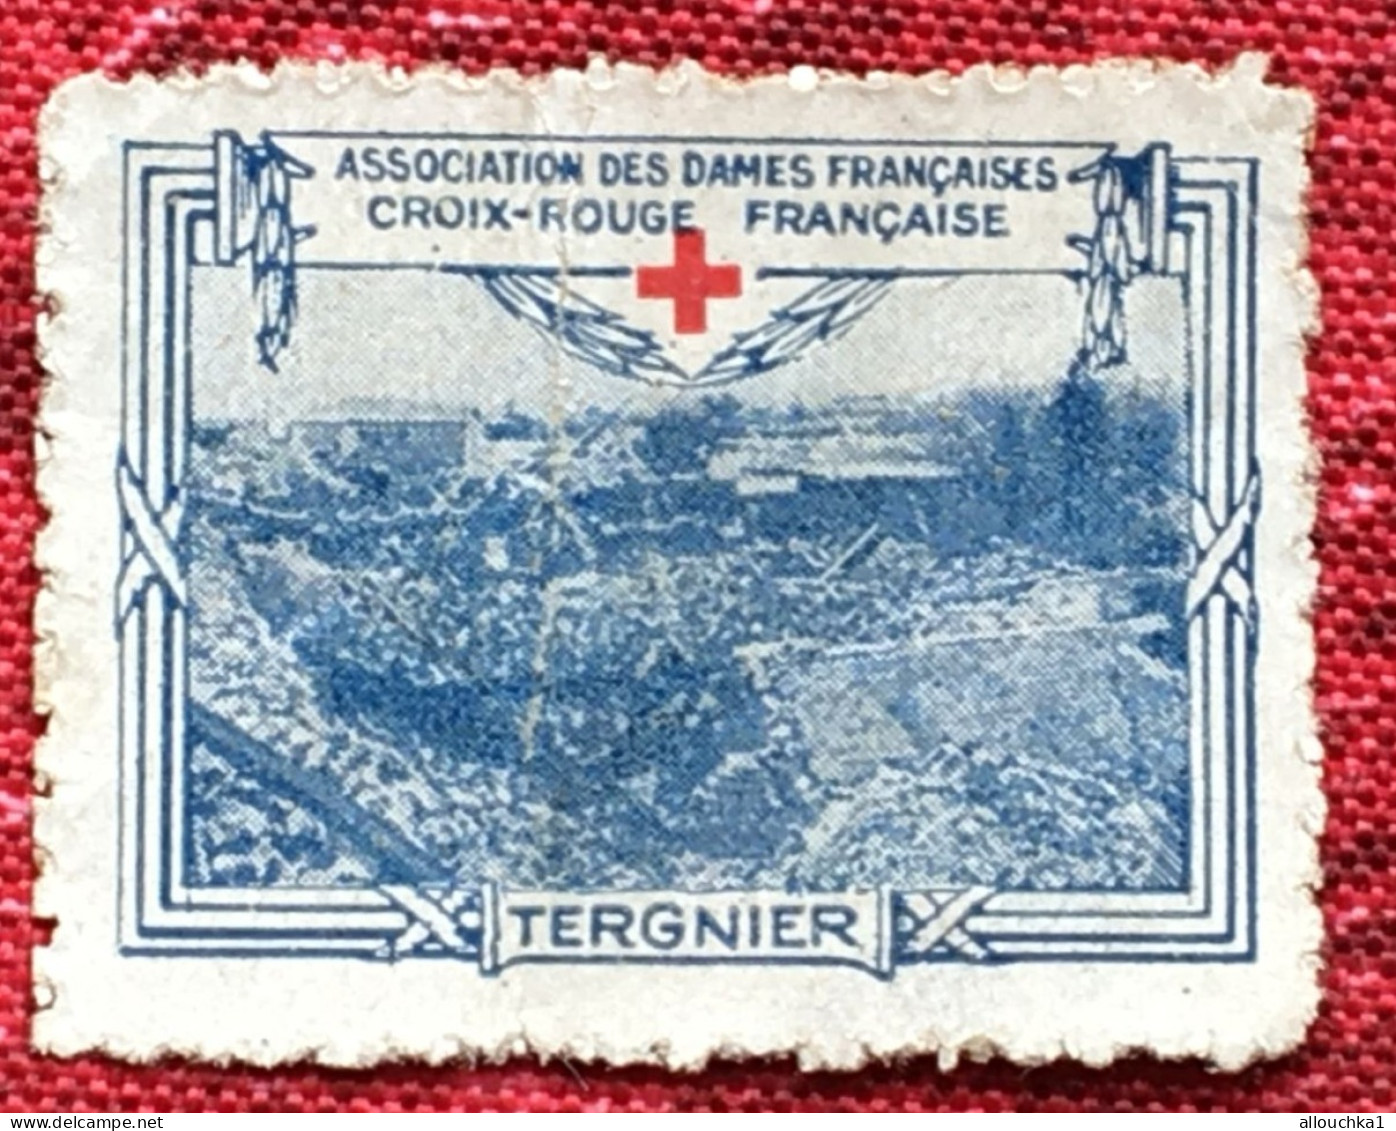 Croix Rouge Française Association Dames Françaises Tergnier -Red Cross-Timbre-Vignette-Erinnophilie-Stamp-Sticker-Viñeta - Red Cross